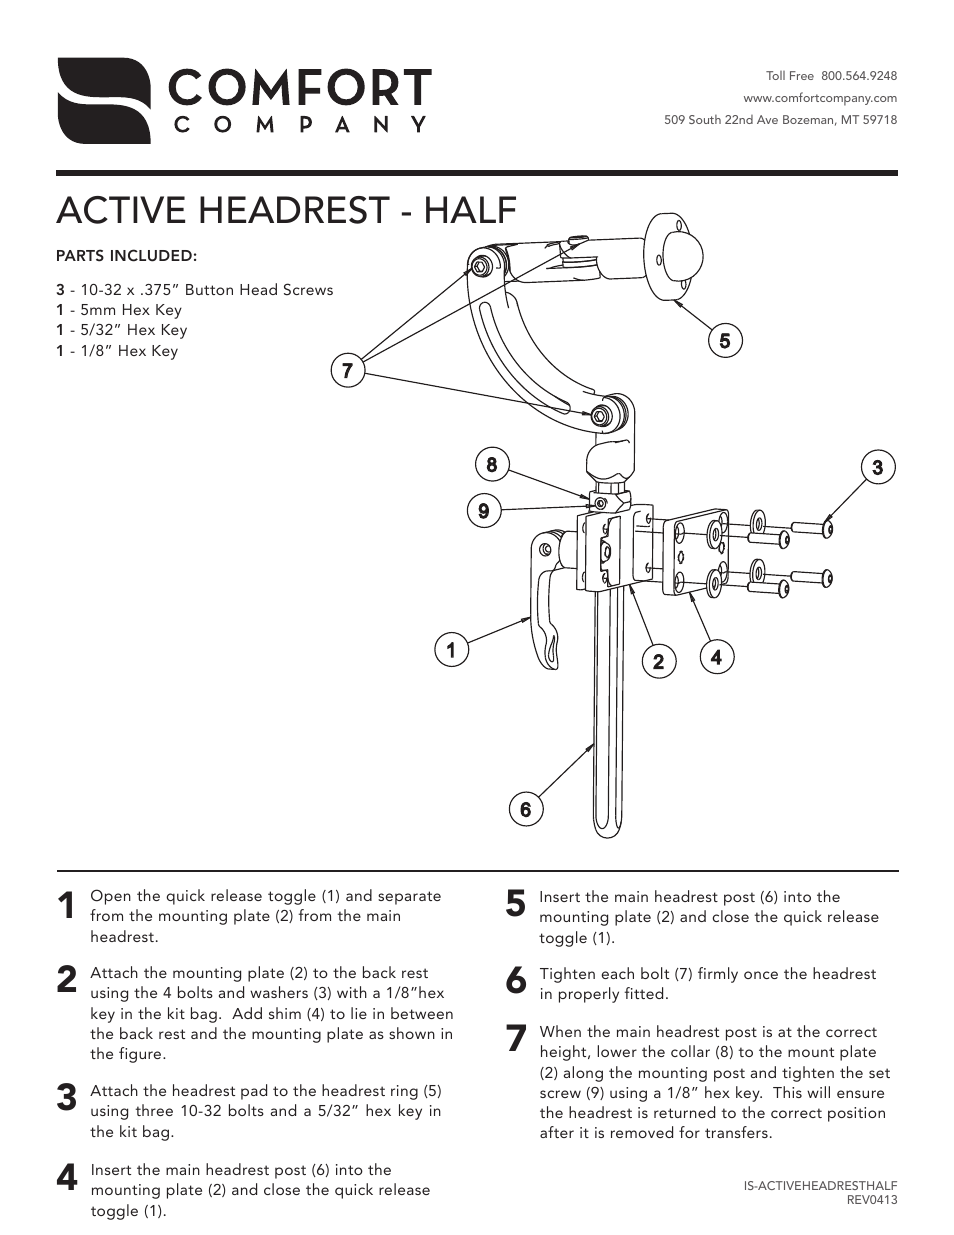 Active Headrest Half